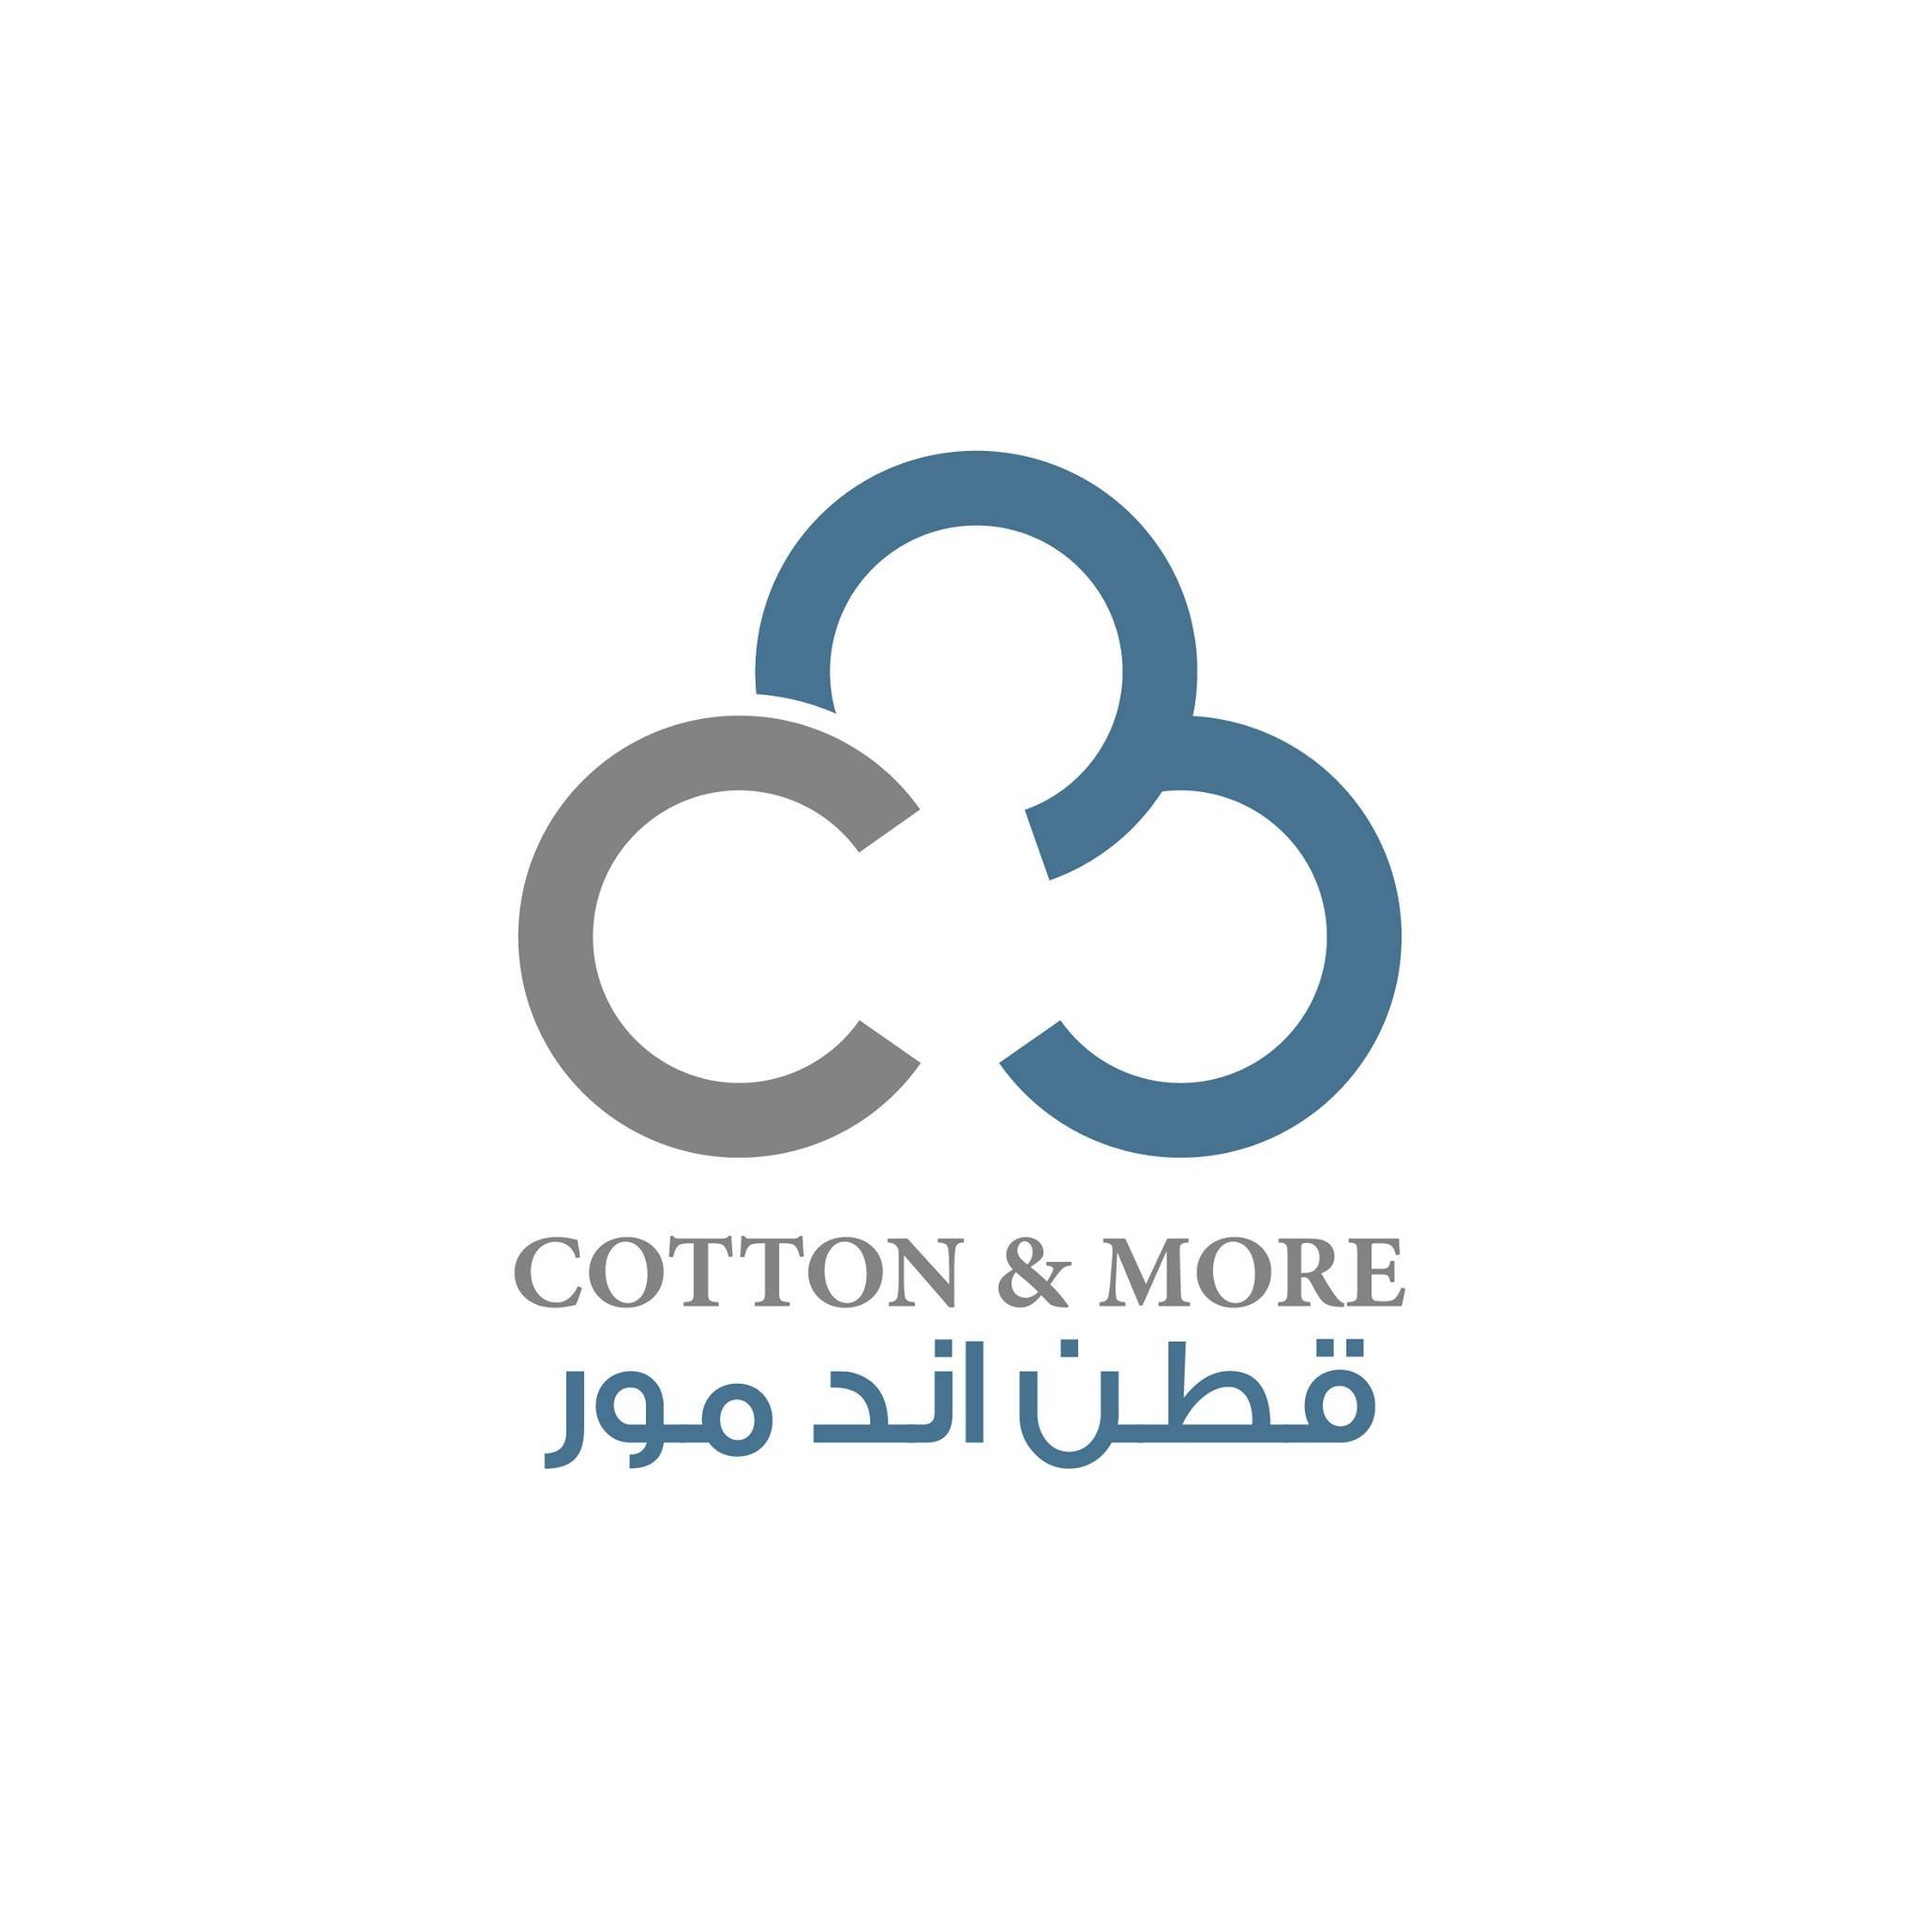 Cotton & More